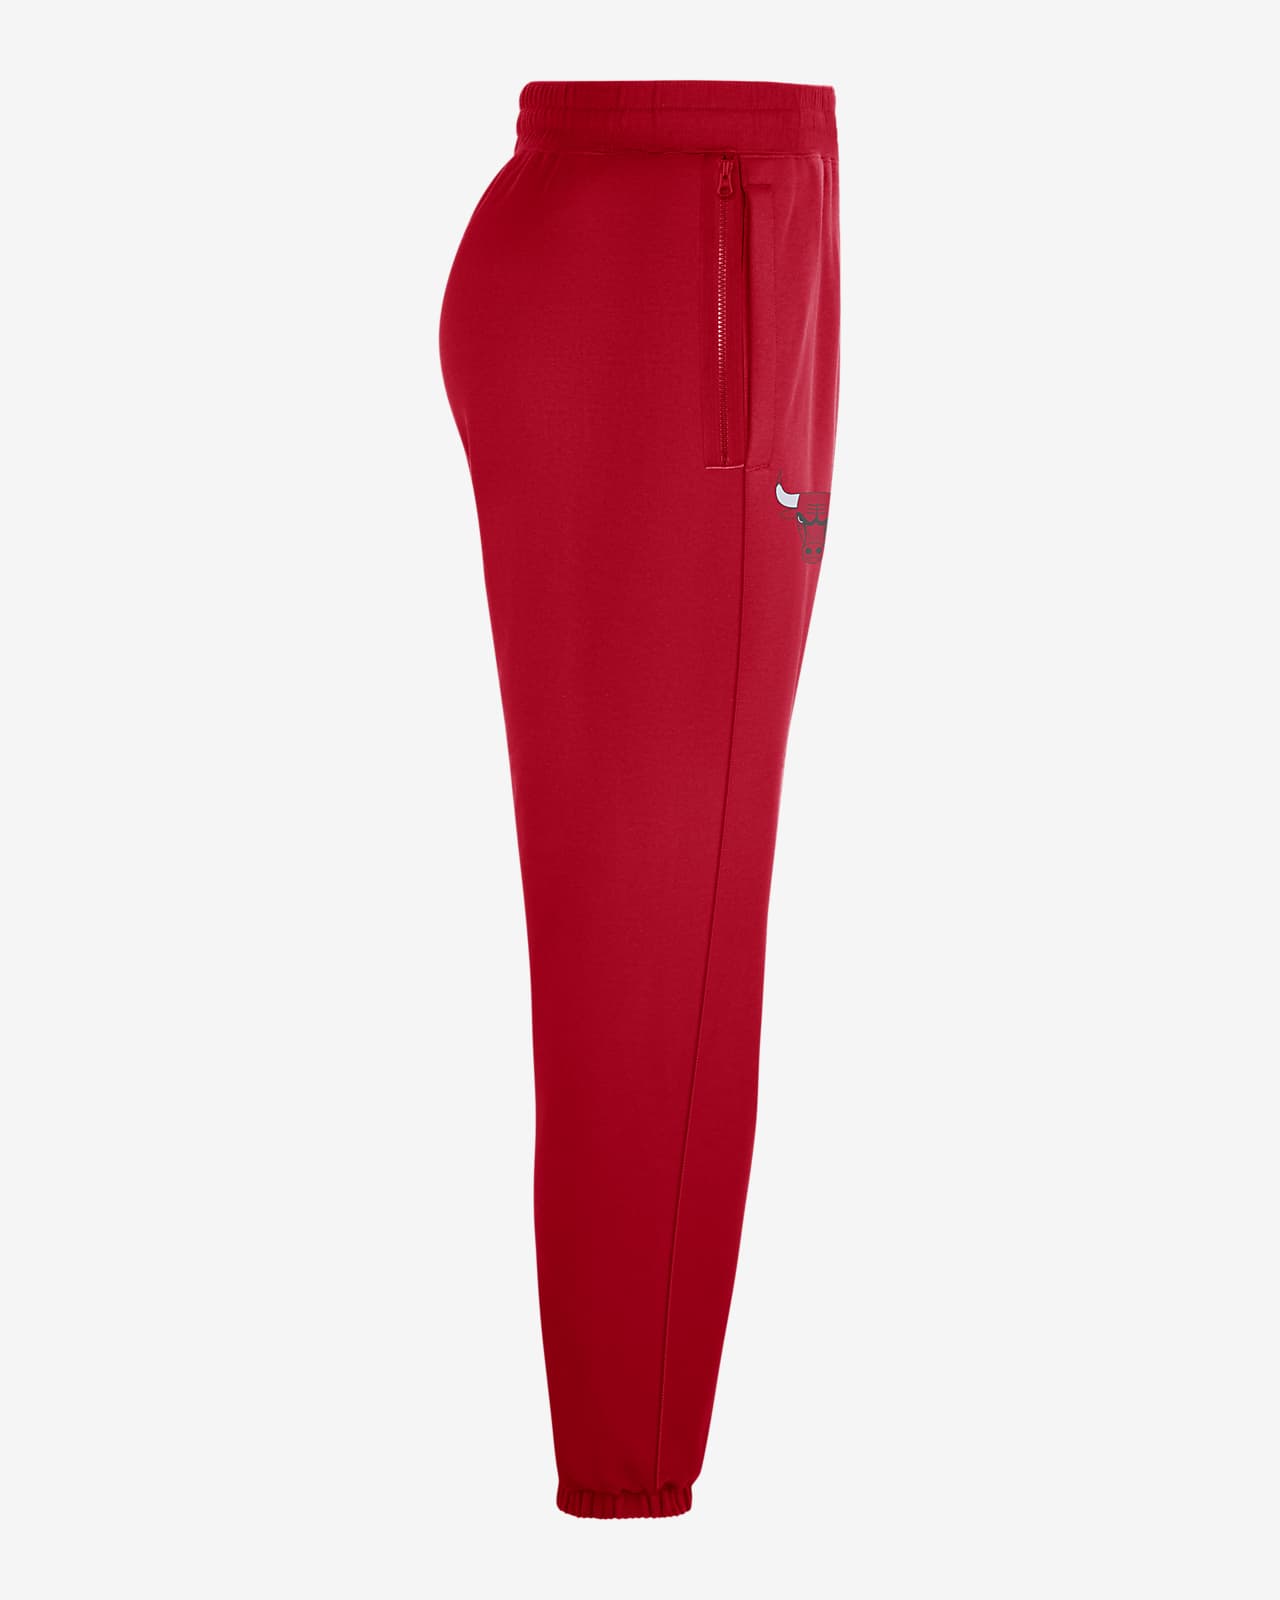 Nike Sweatpants/ Track Pants Black/ White stripes Women/ Men XS New | eBay